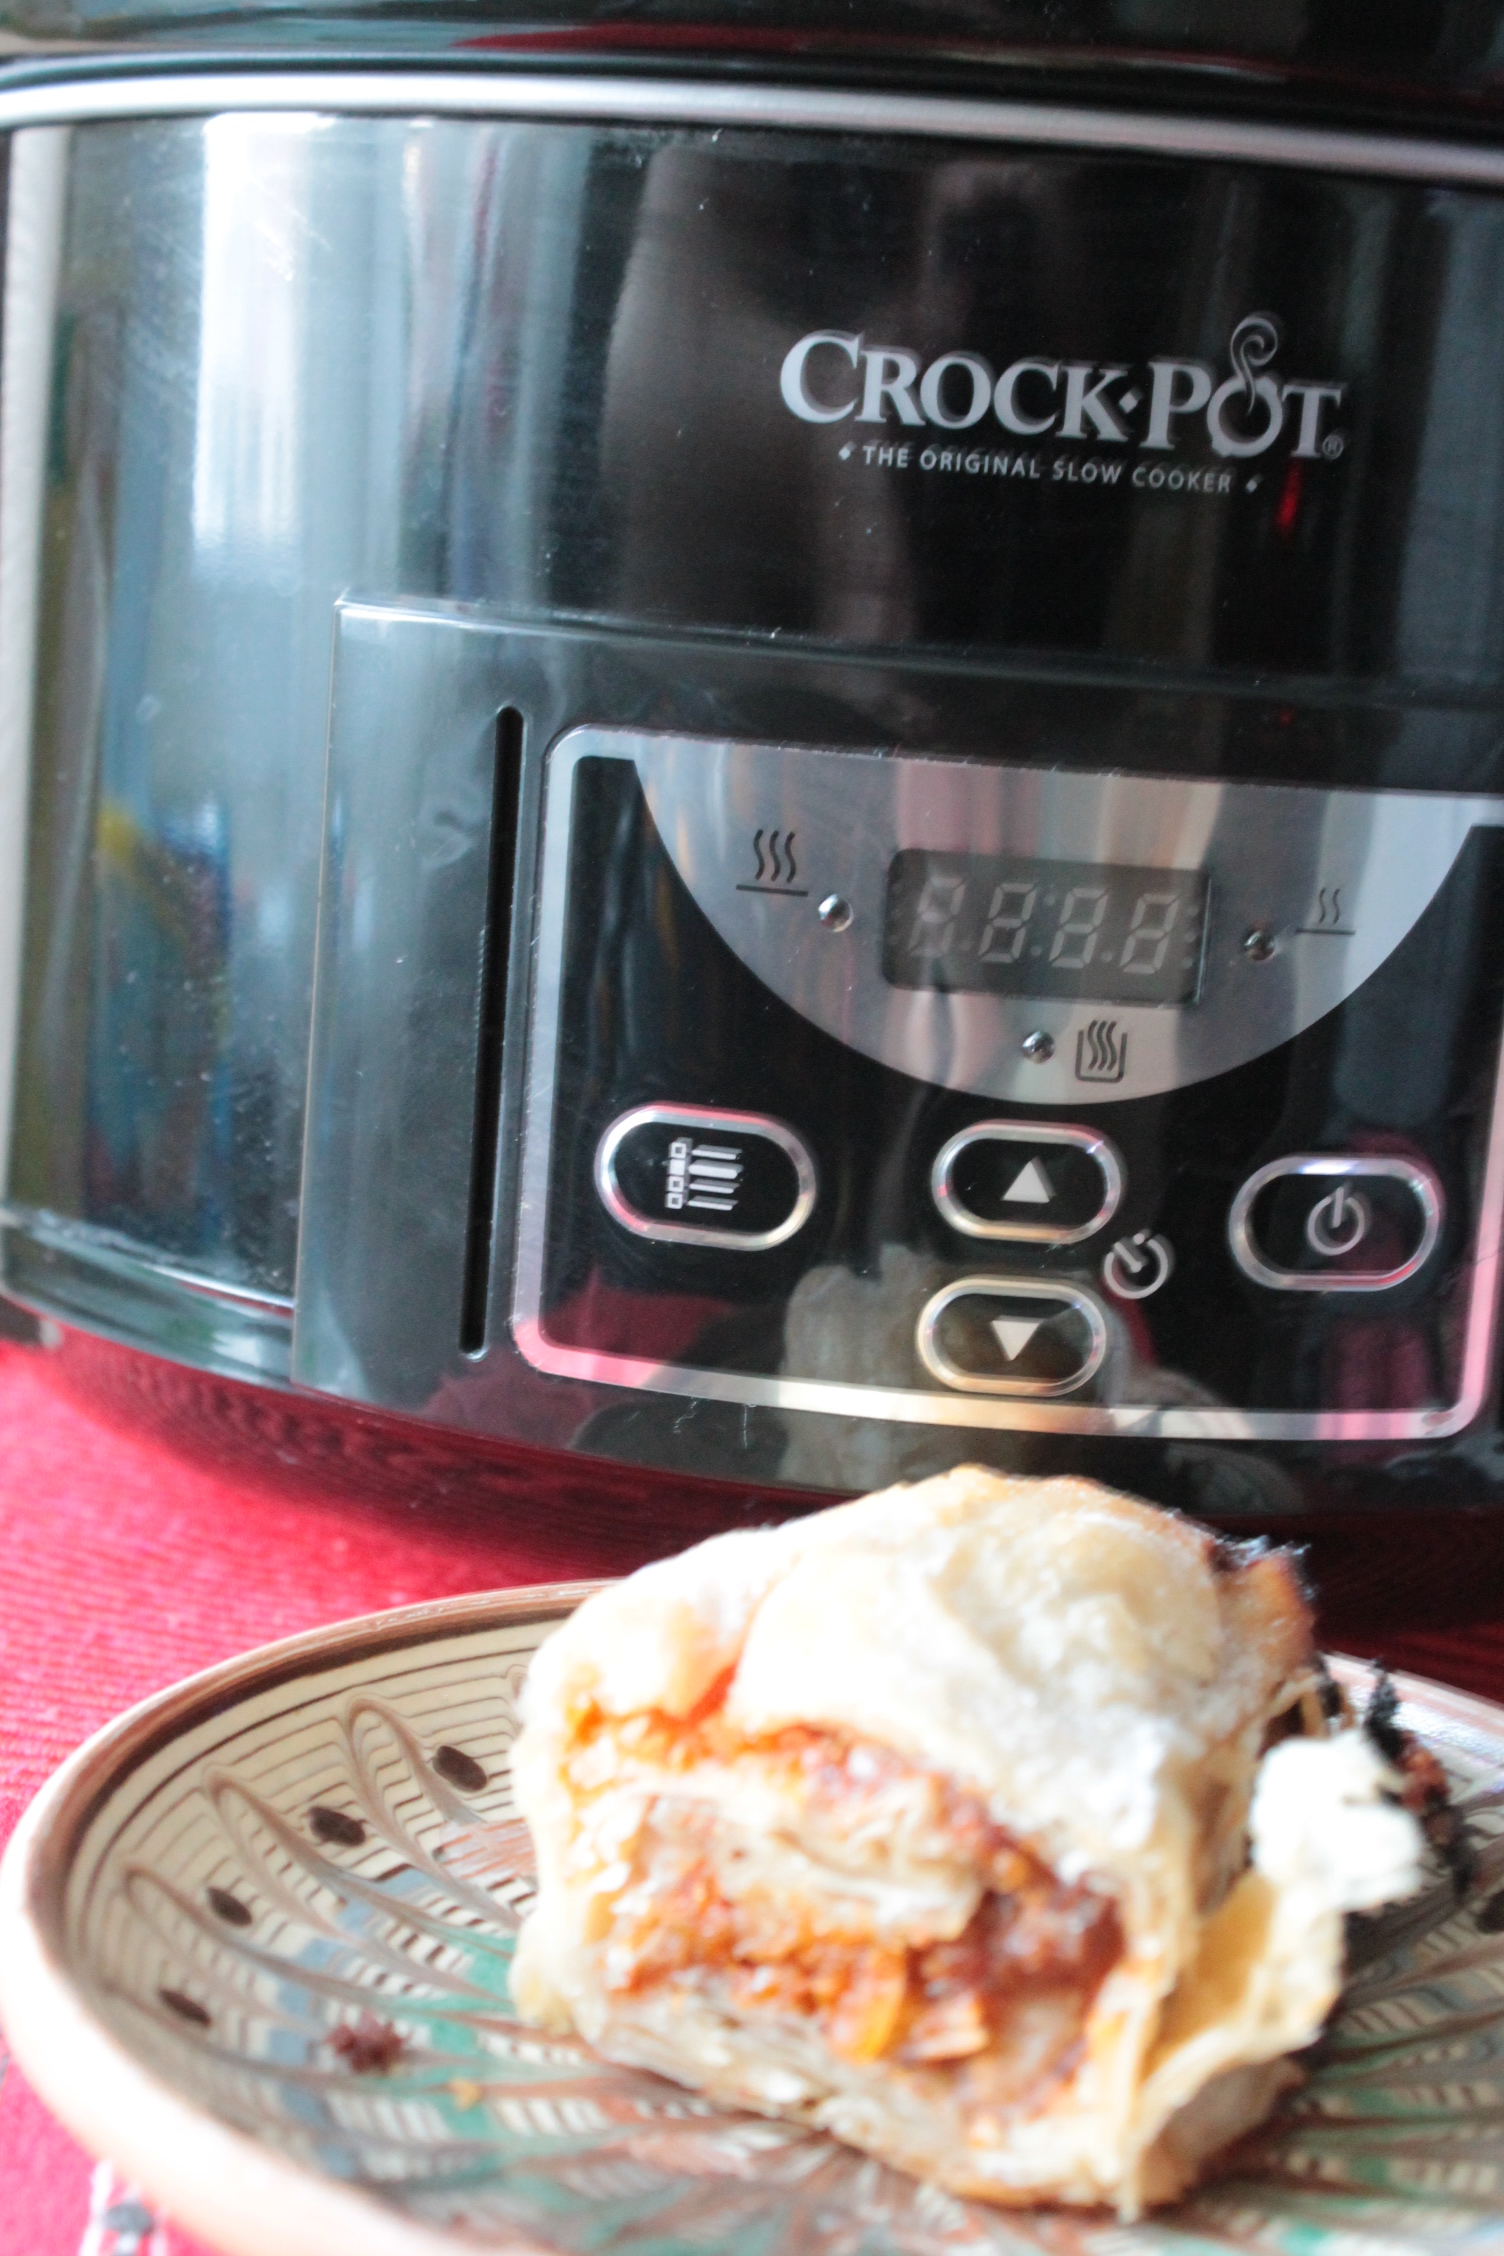 Placinta cu dovleac, mere, morcovi si migdale la slow cooker Crock-Pot 4,7 L